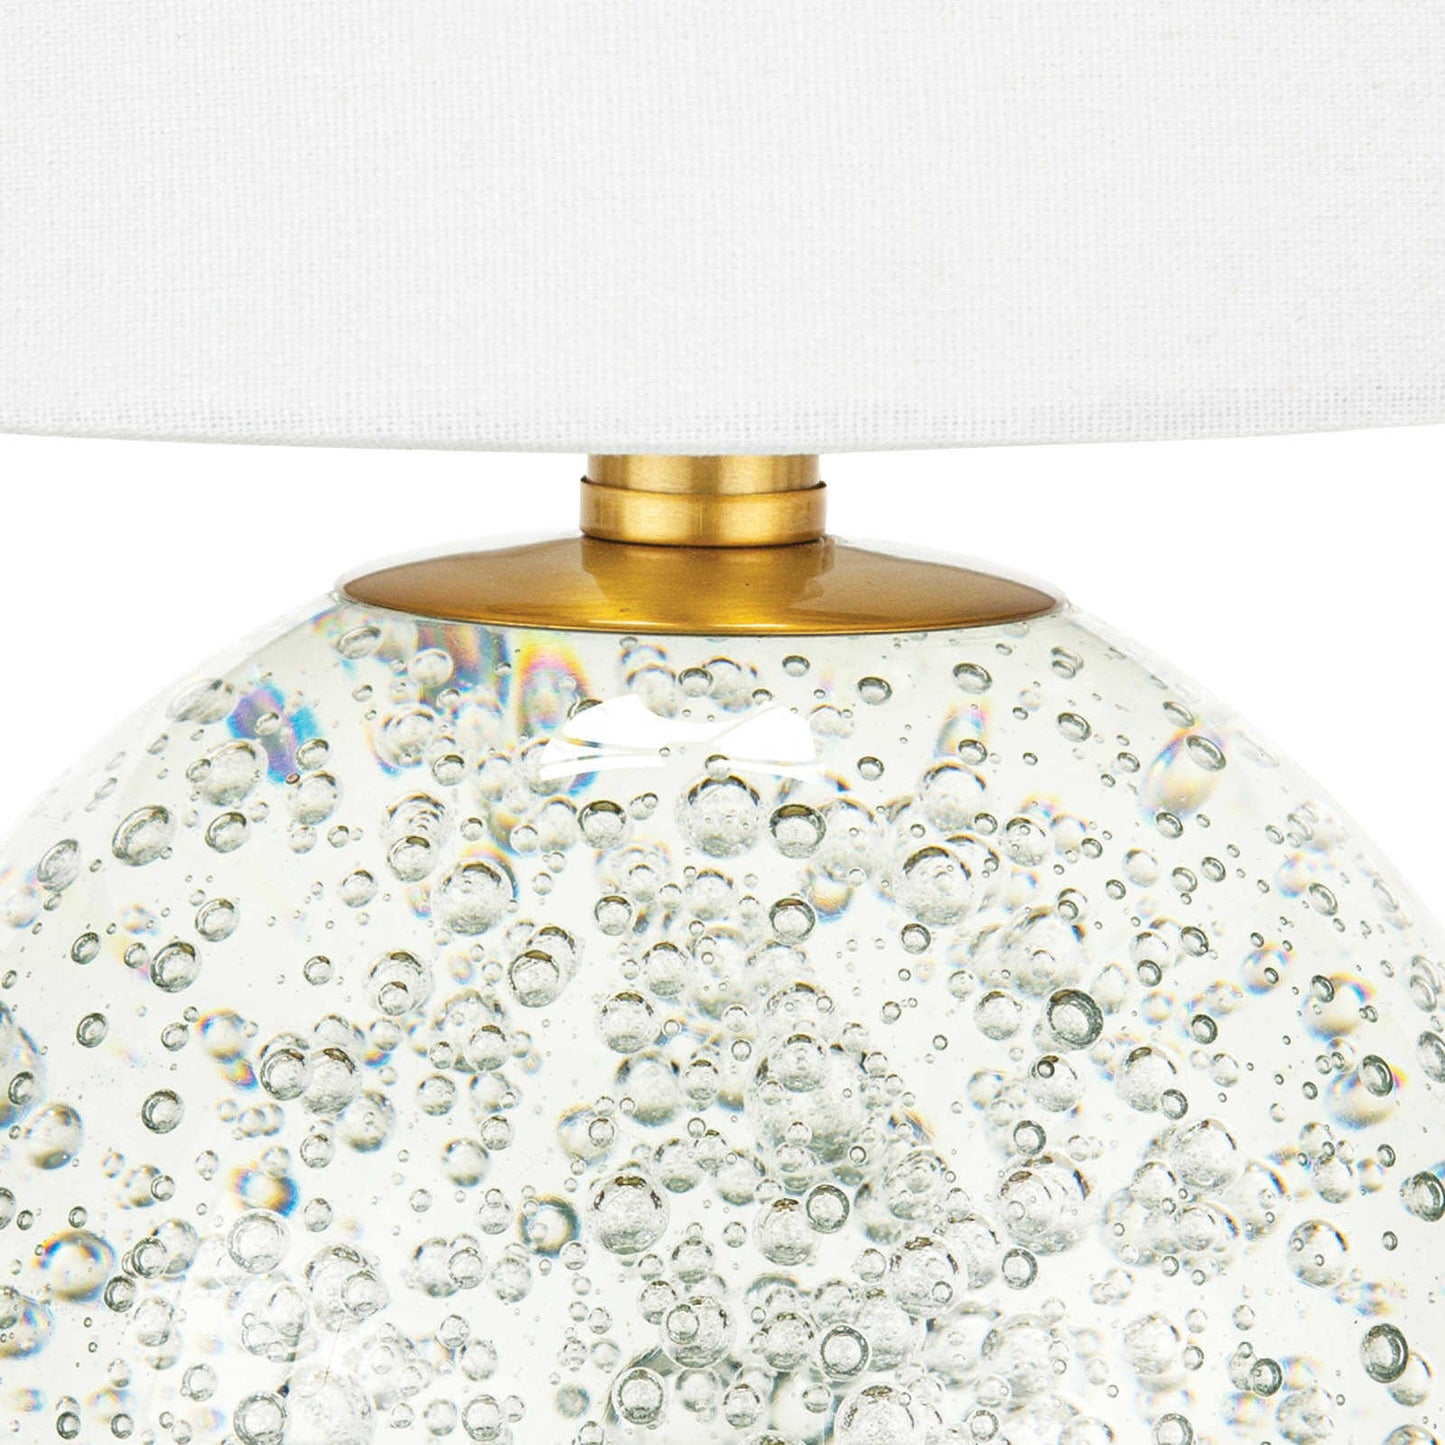 Bulle Crystal Mini Lamp by Regina Andrew